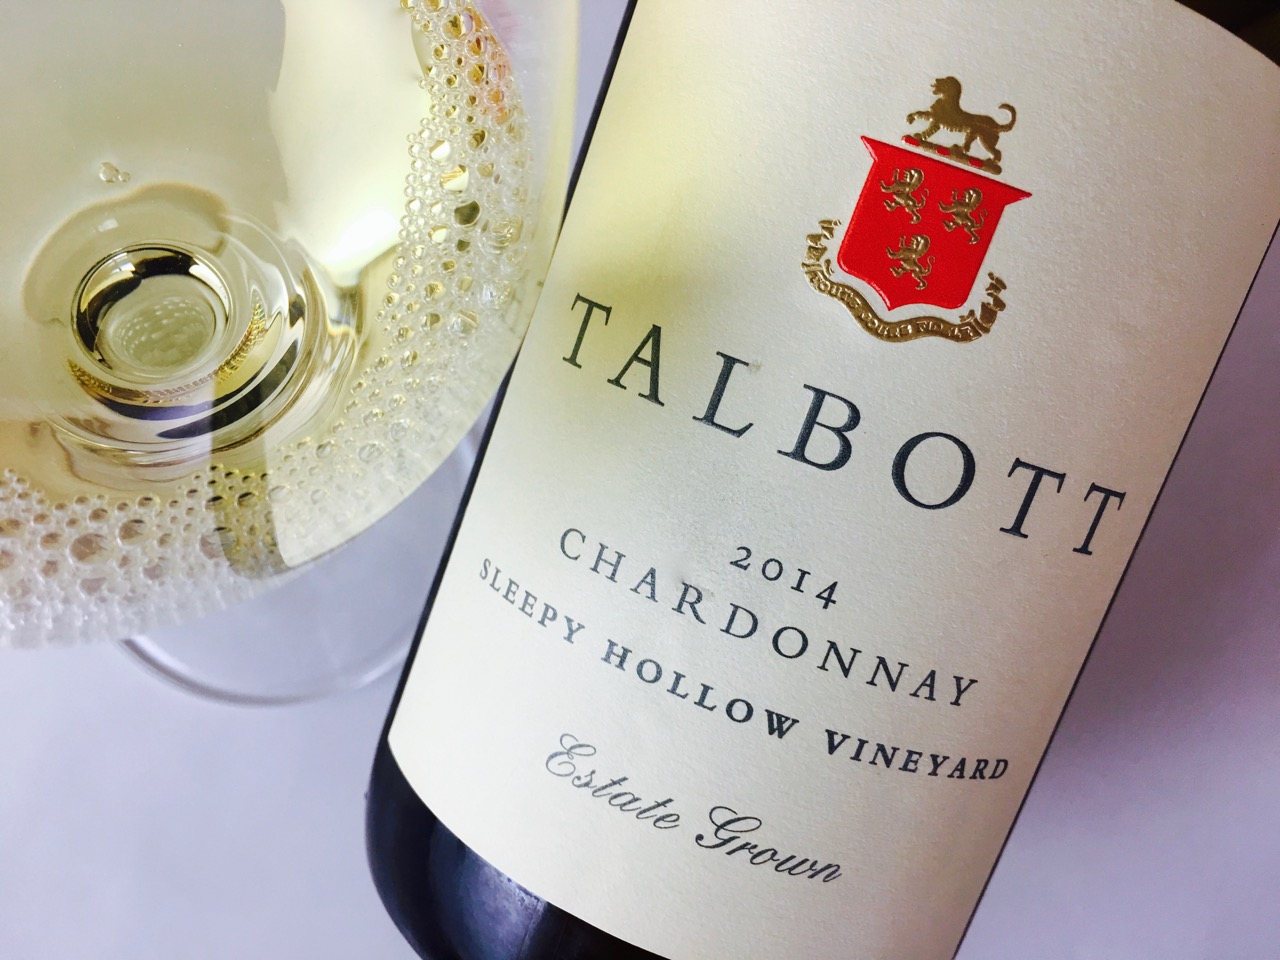 2014 Talbott Chardonnay Sleepy Hollow Vineyard Santa Lucia Highlands